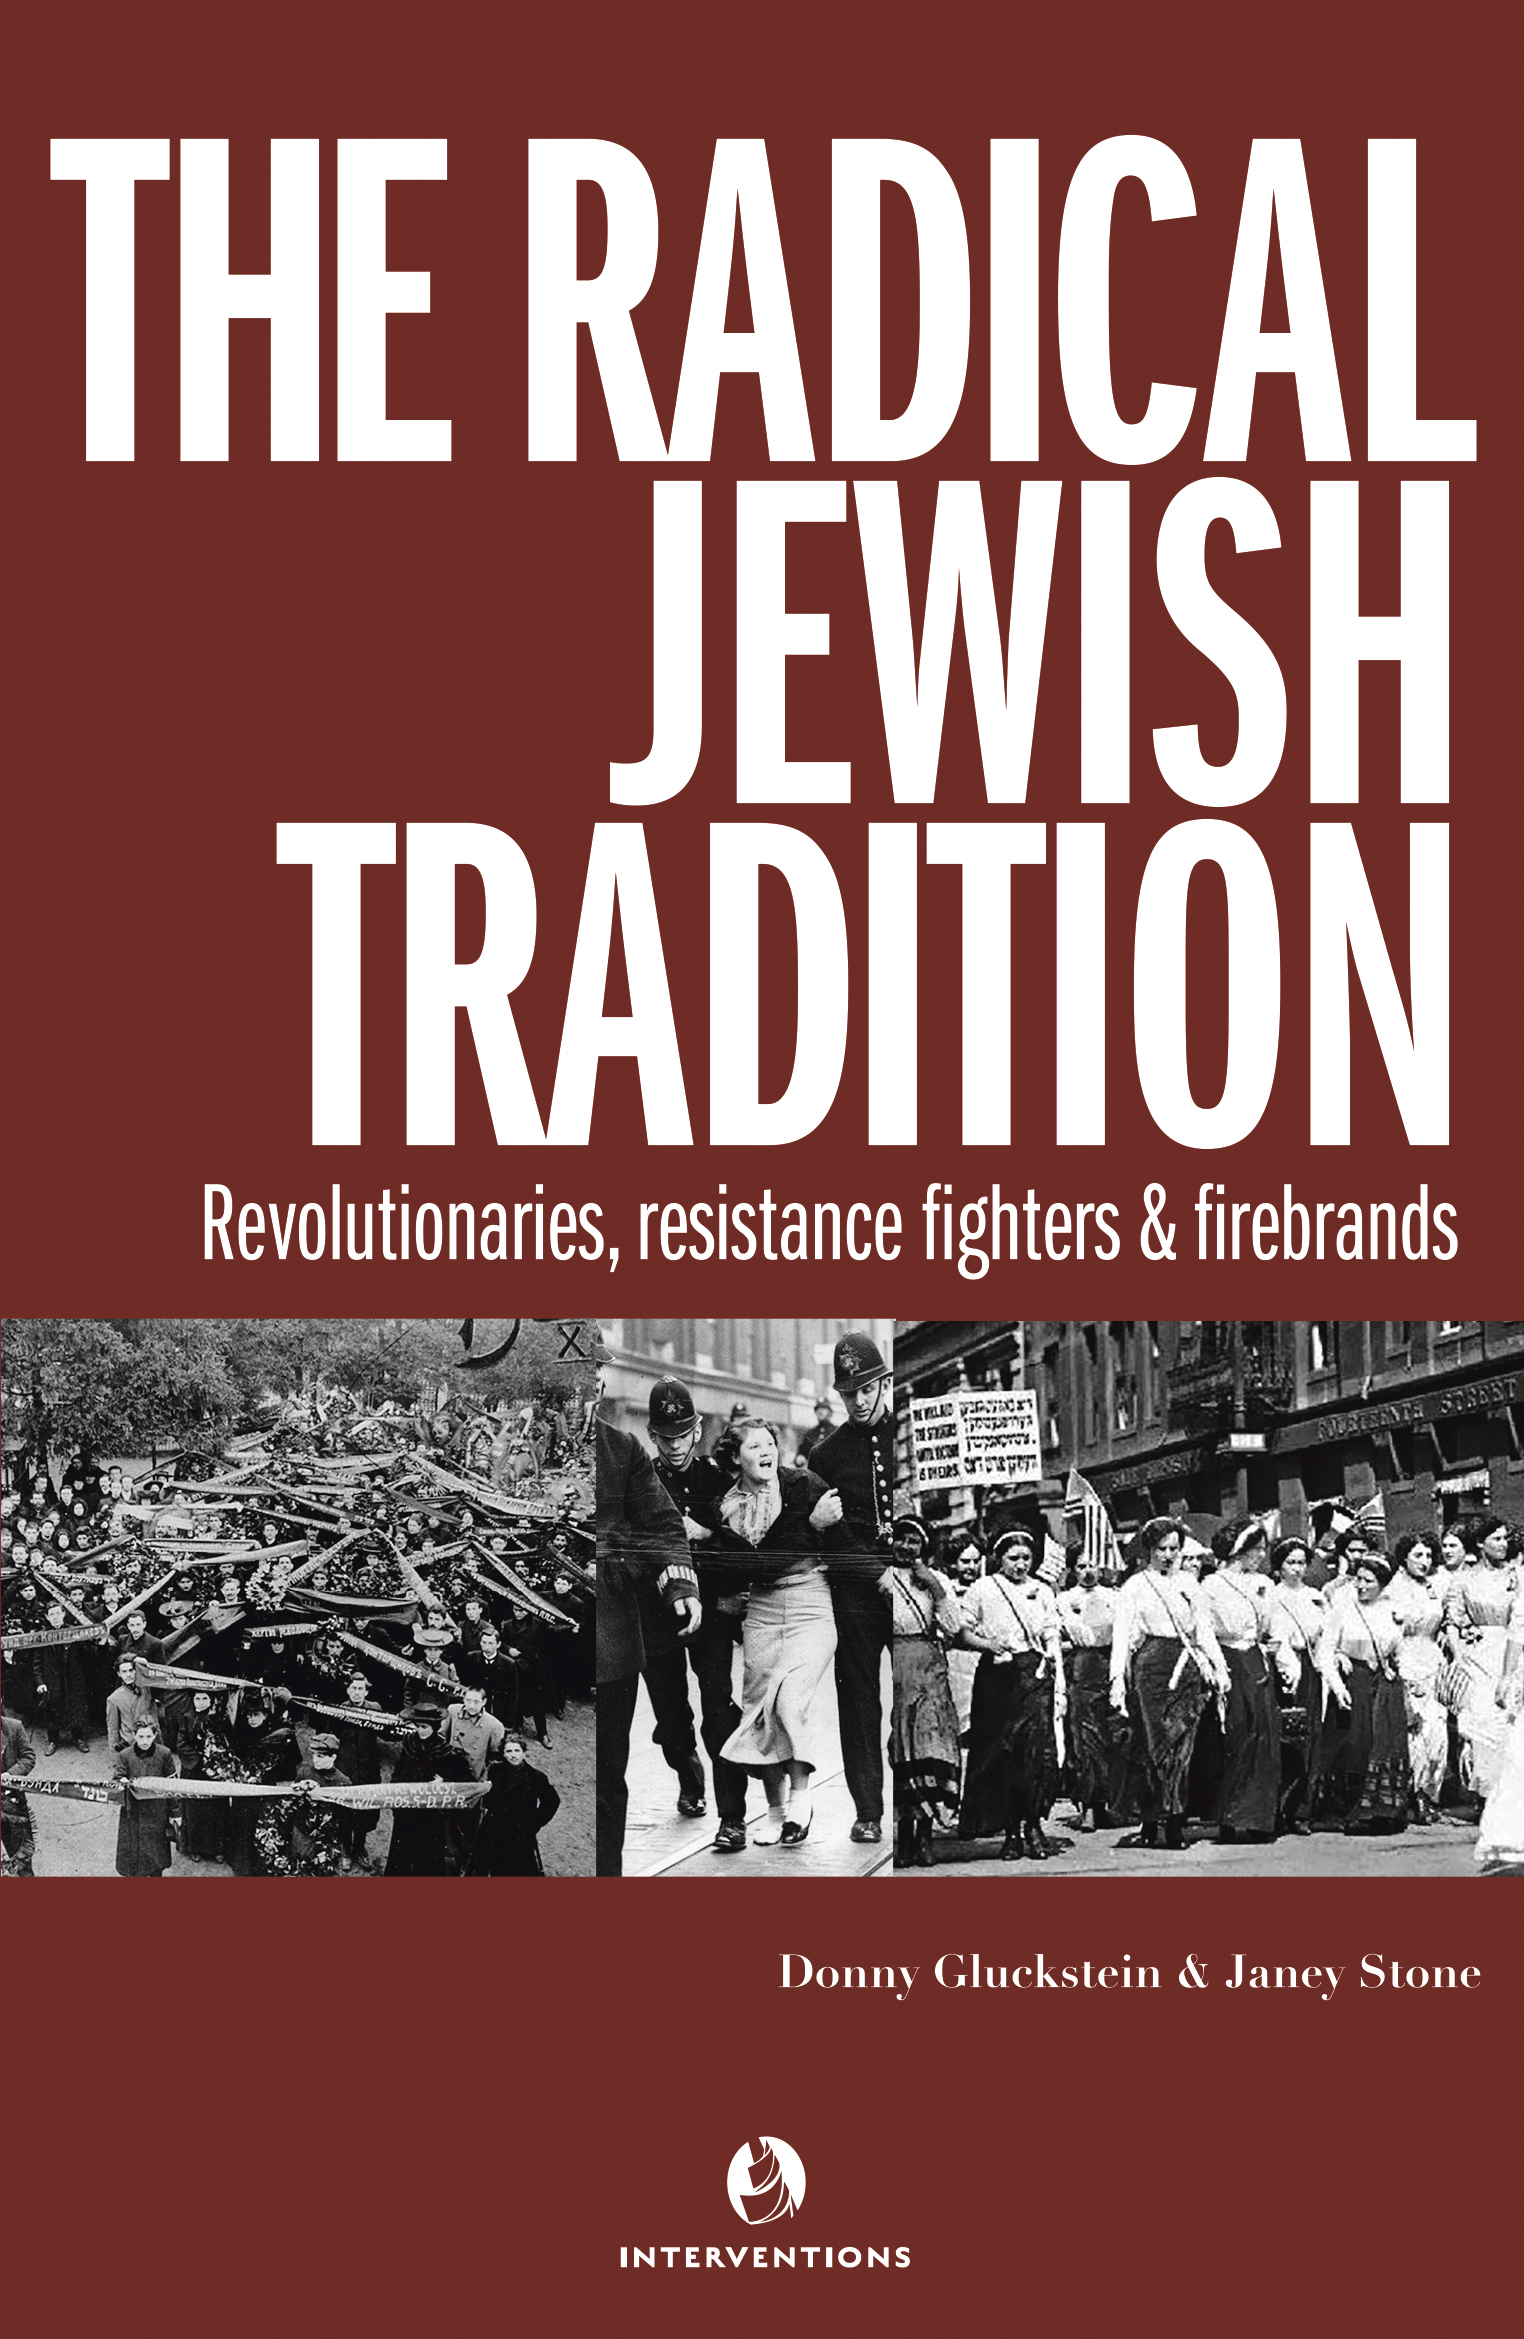 The Jewish Radical Tradition